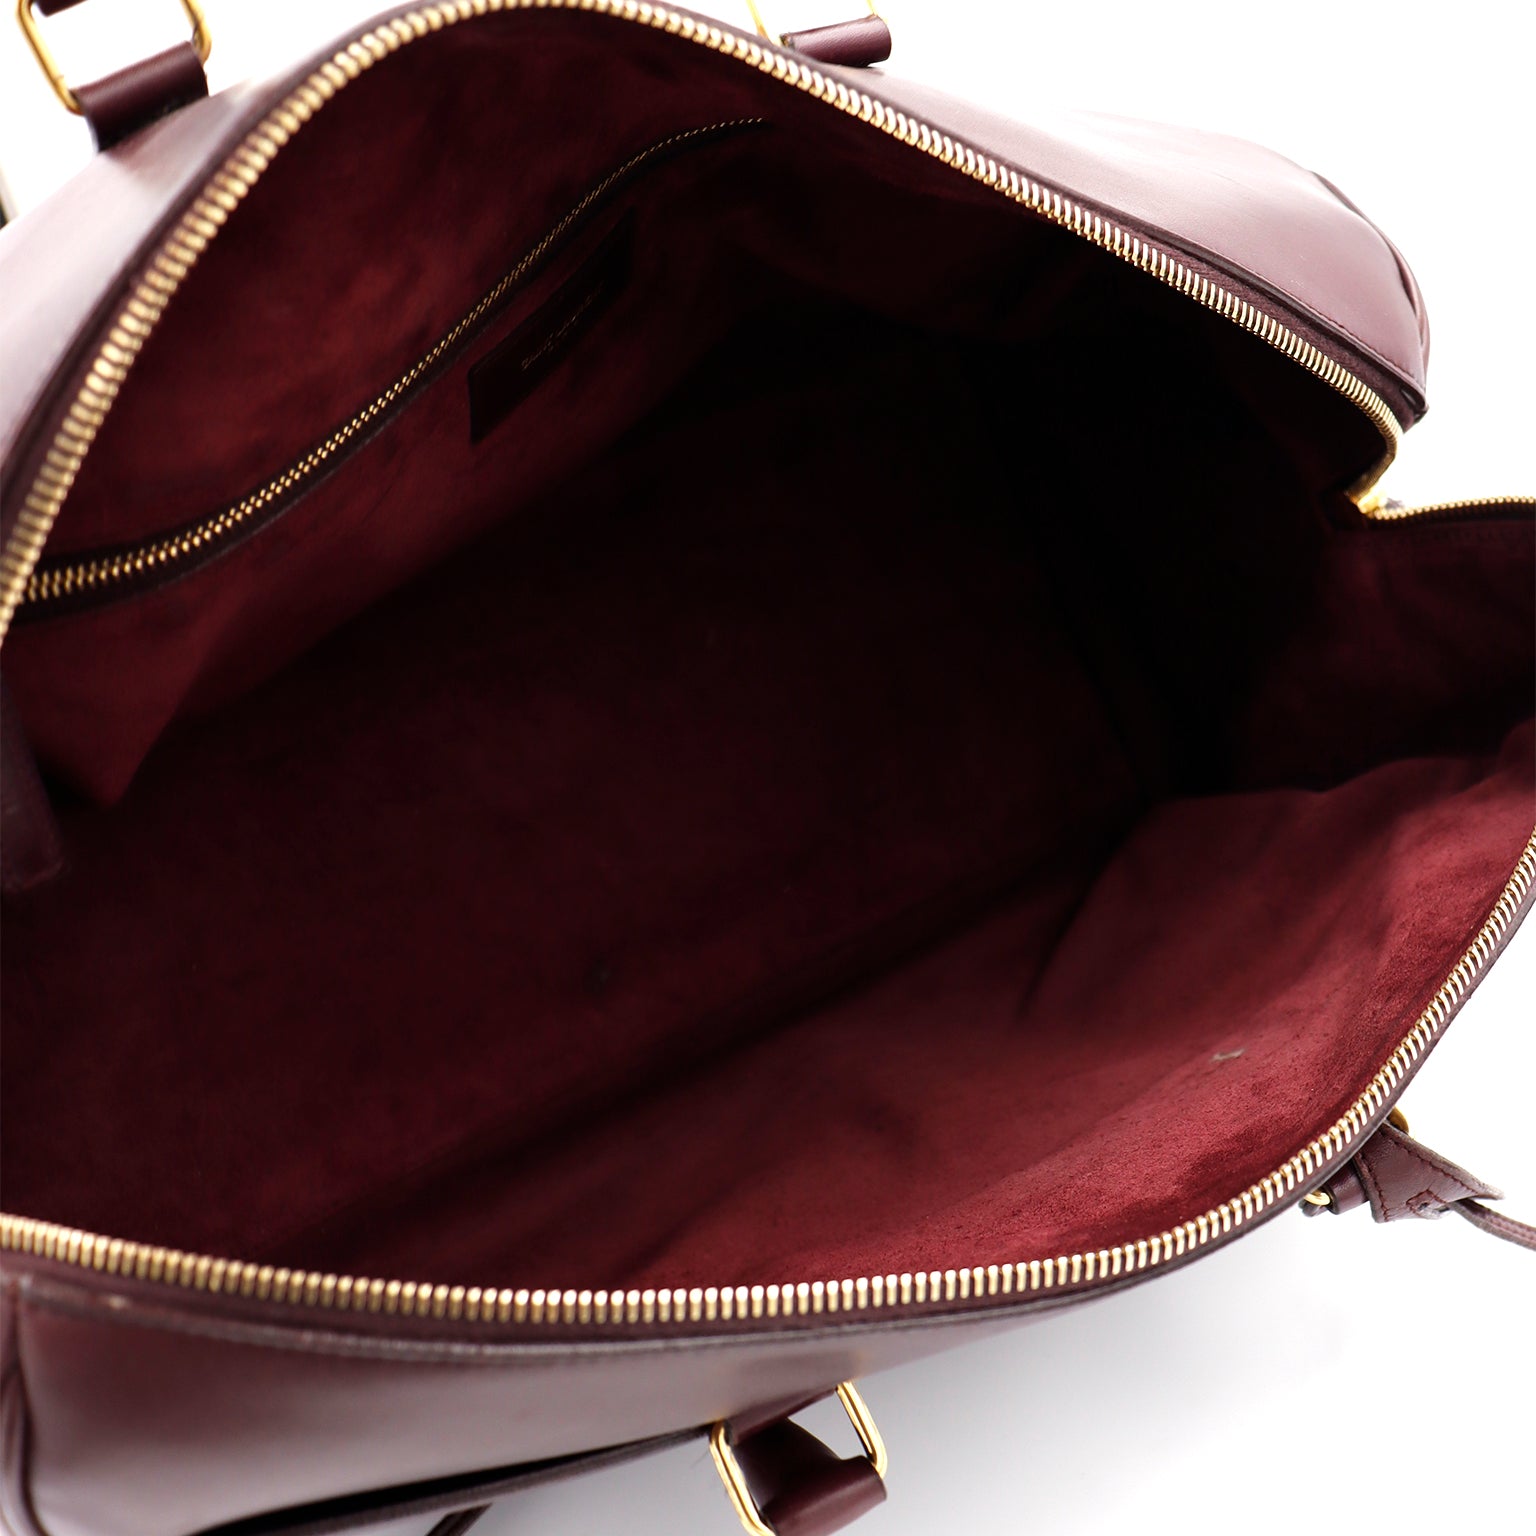 SAINT LAURENT DUFFEL BAG WITH LOGO, Second Hand Louis Vuitton Keepall Bags